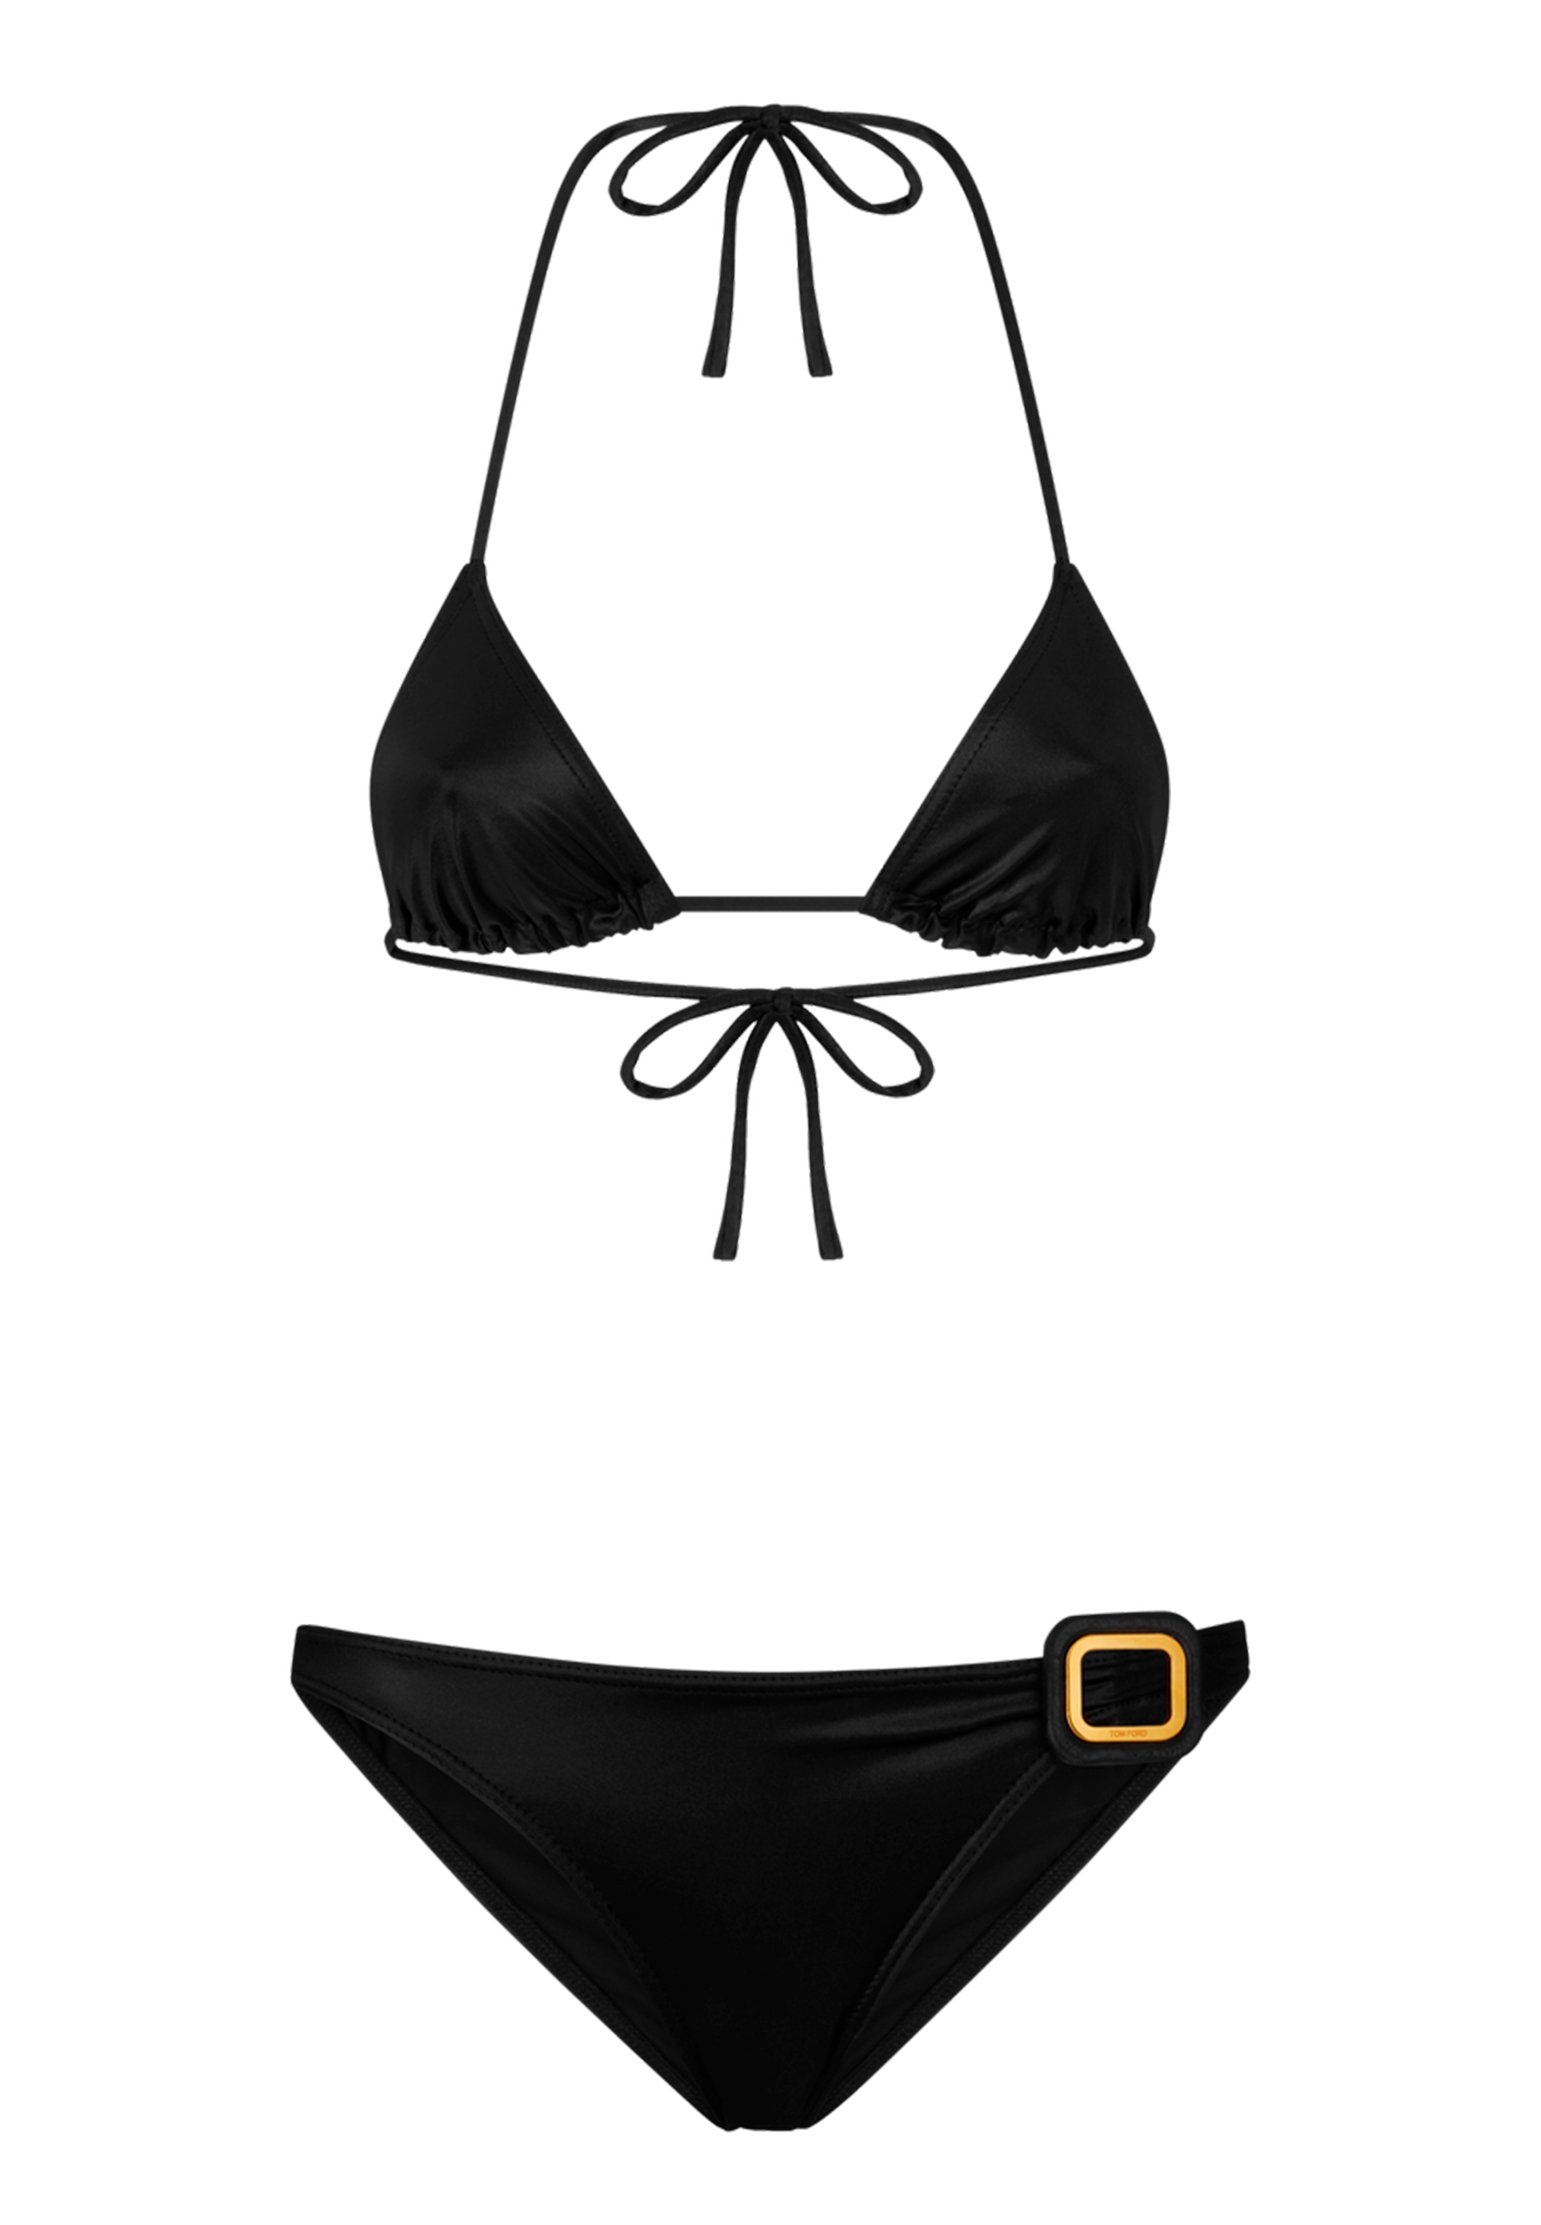 Bikini TOM FORD Color: black (Code: 3711) in online store Allure